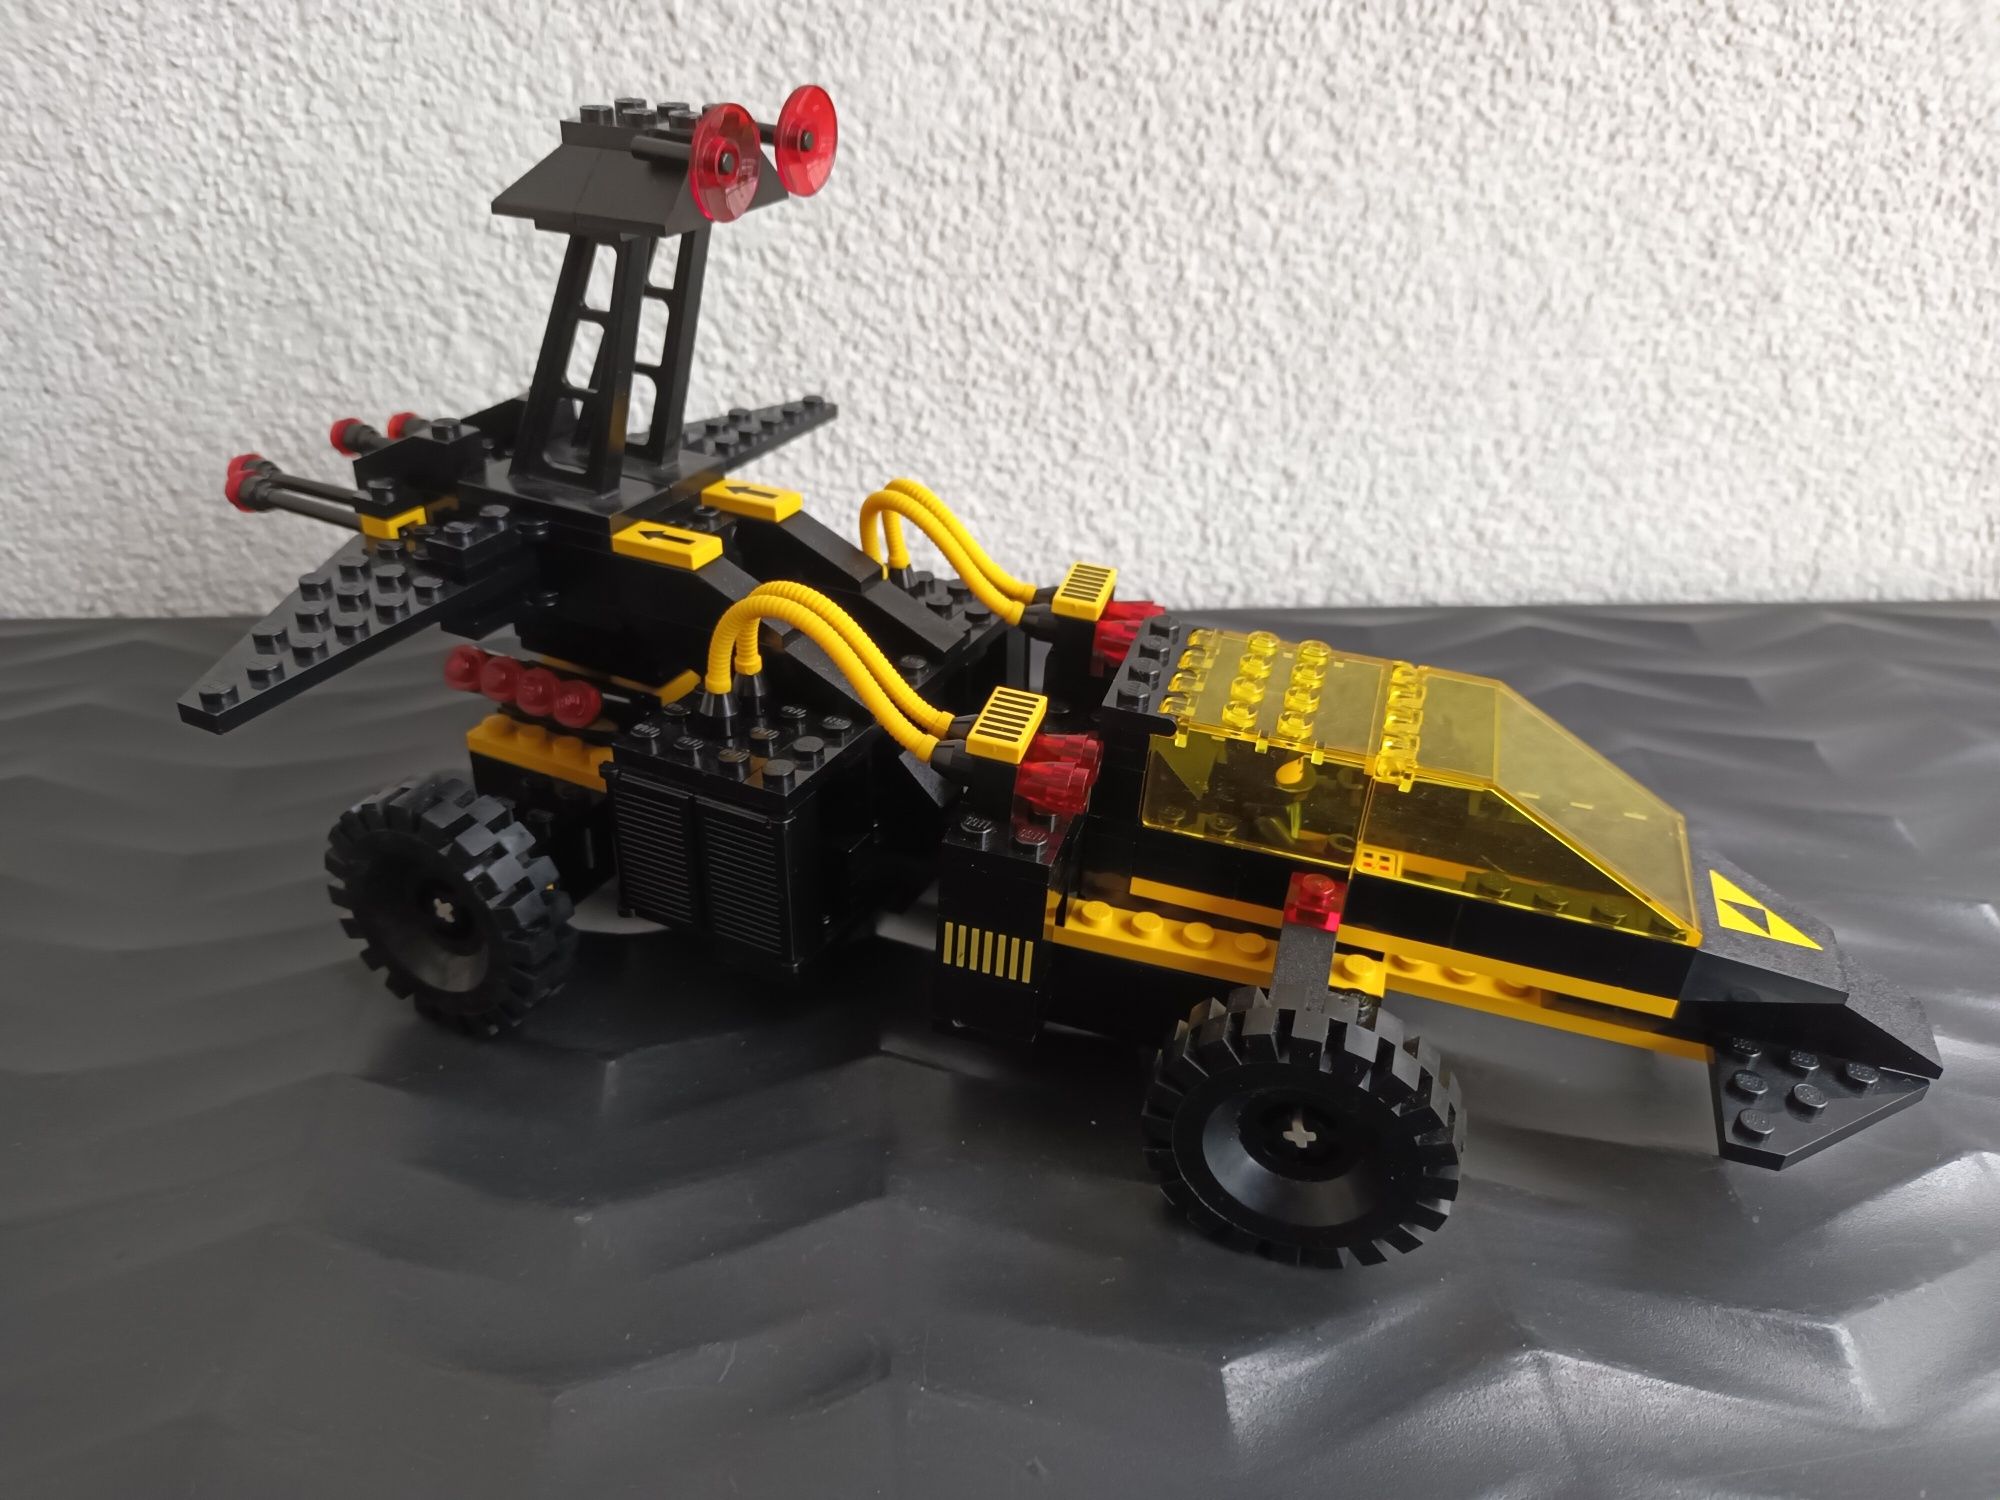 Klocki LEGO Space blacktron I - 6941 Battrax